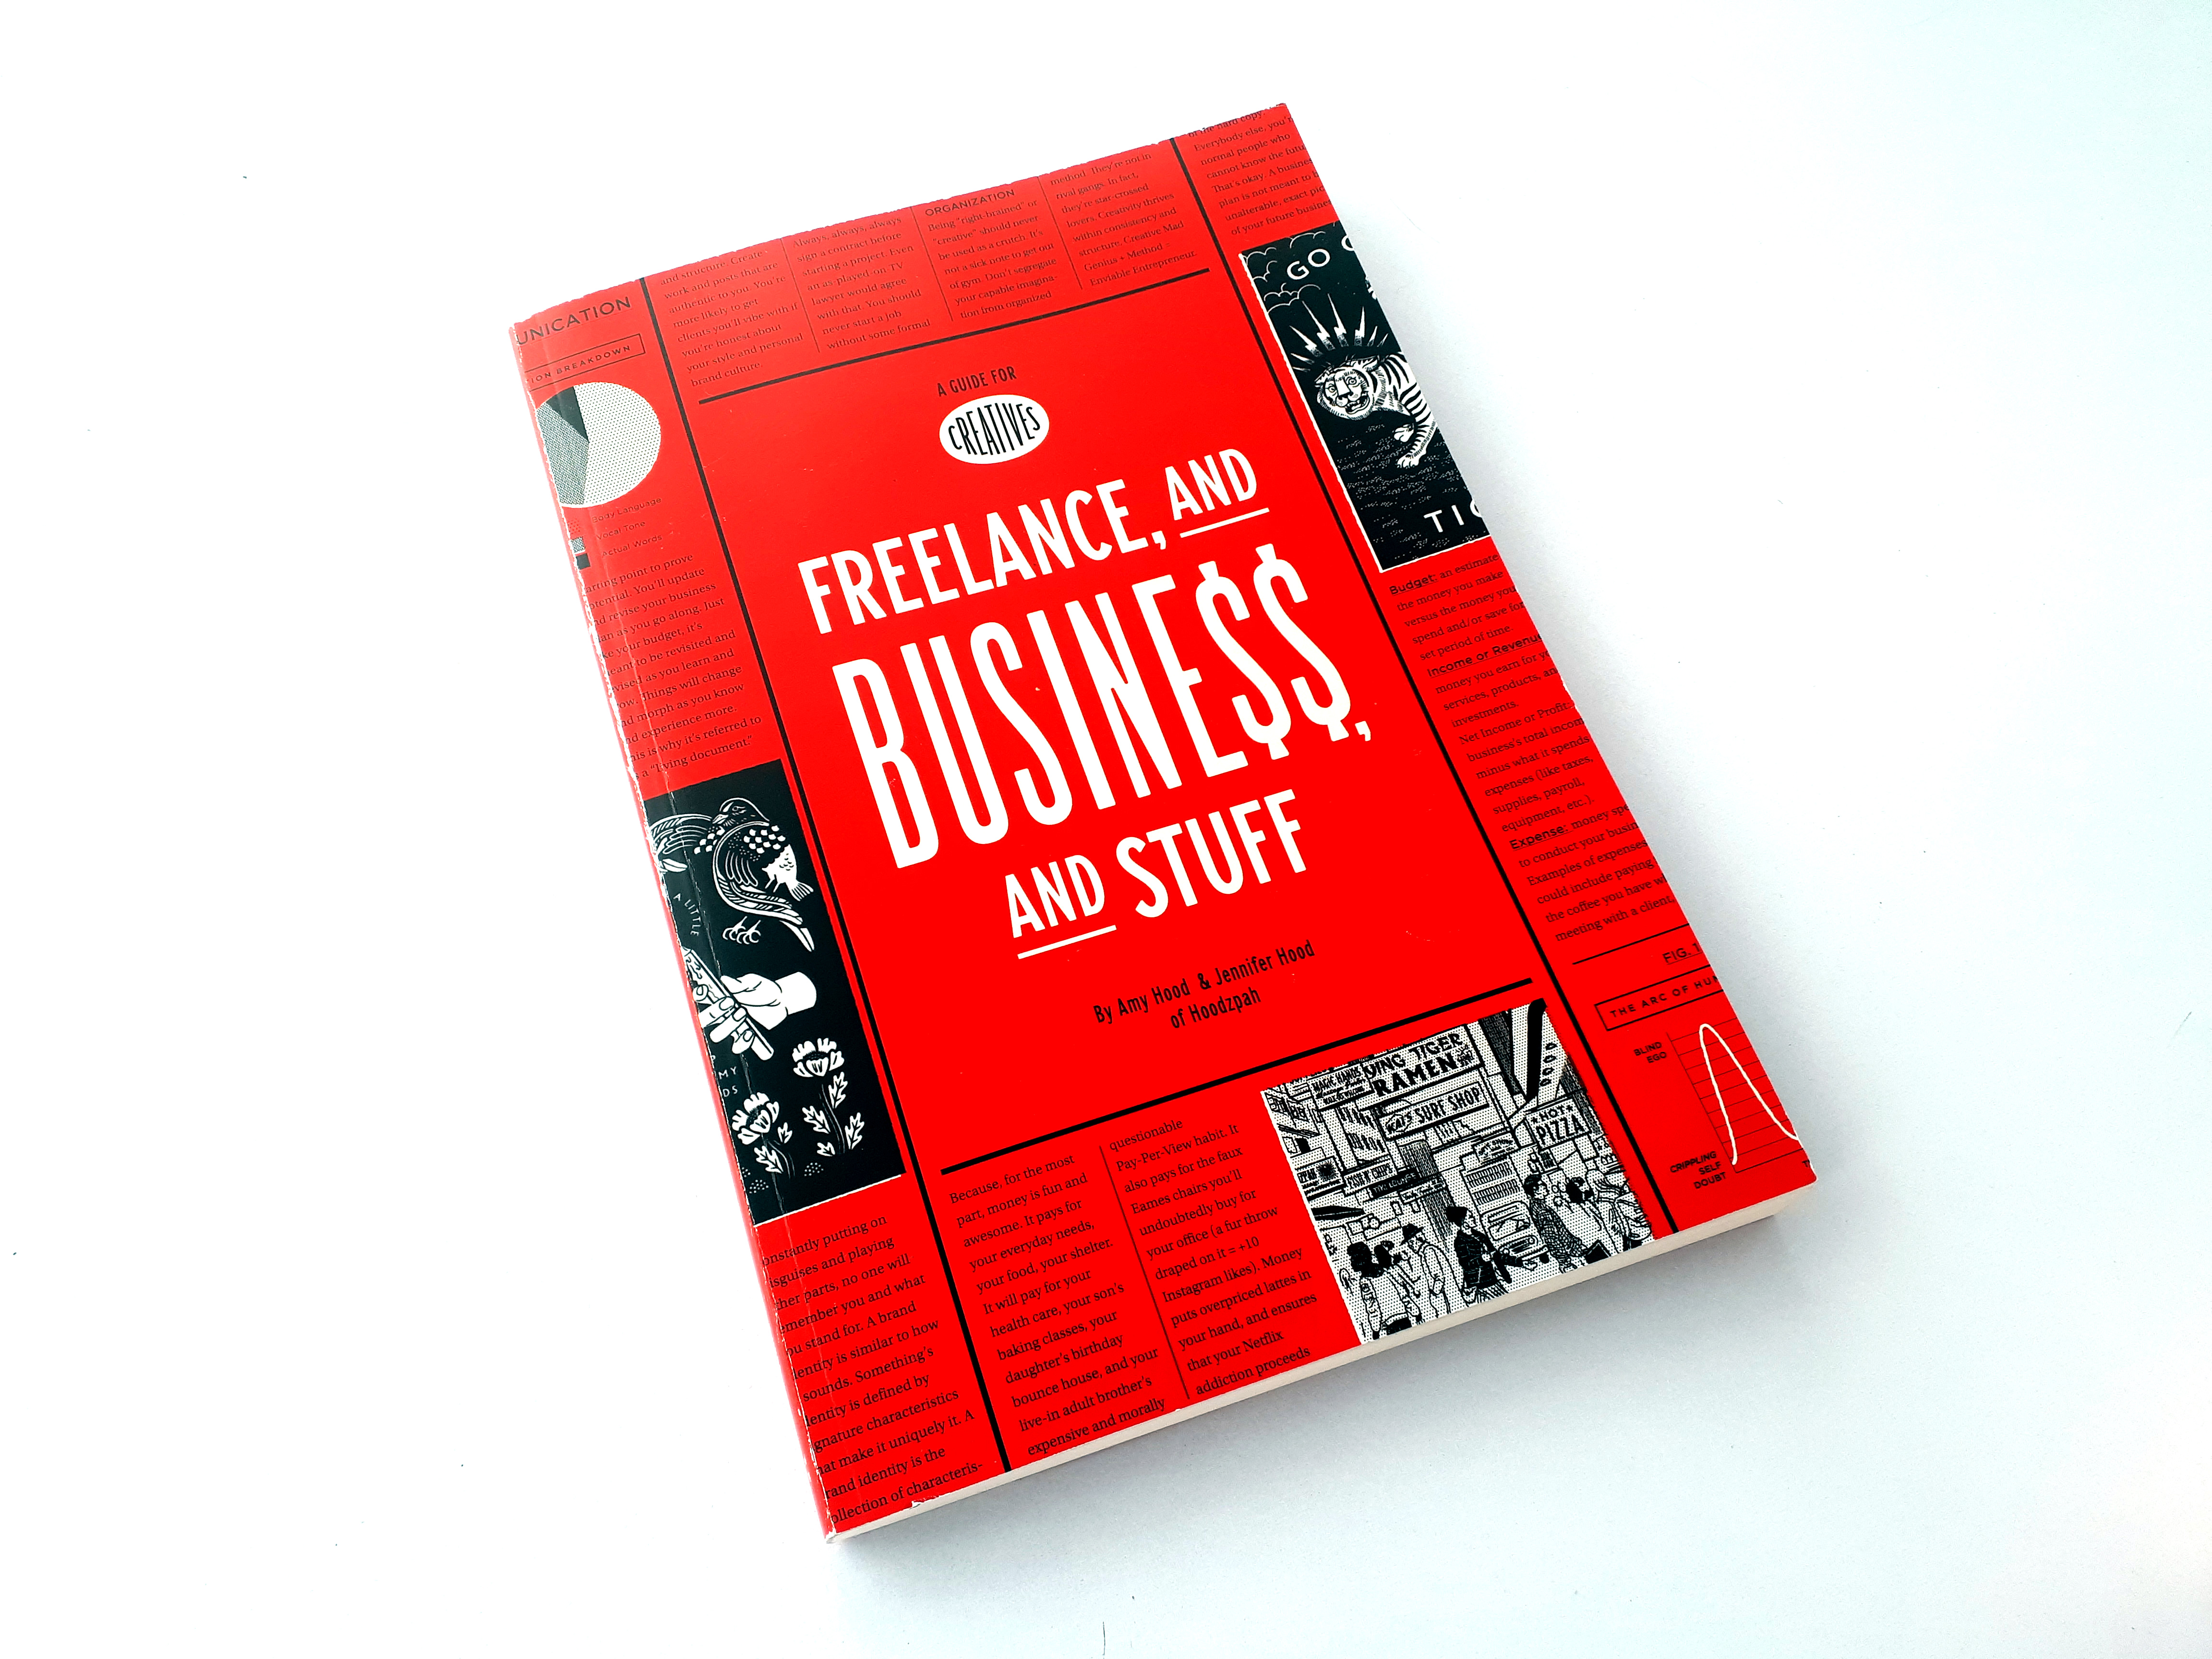 Freelance, and Business, and Stuff by Amy & Jennifer Hood